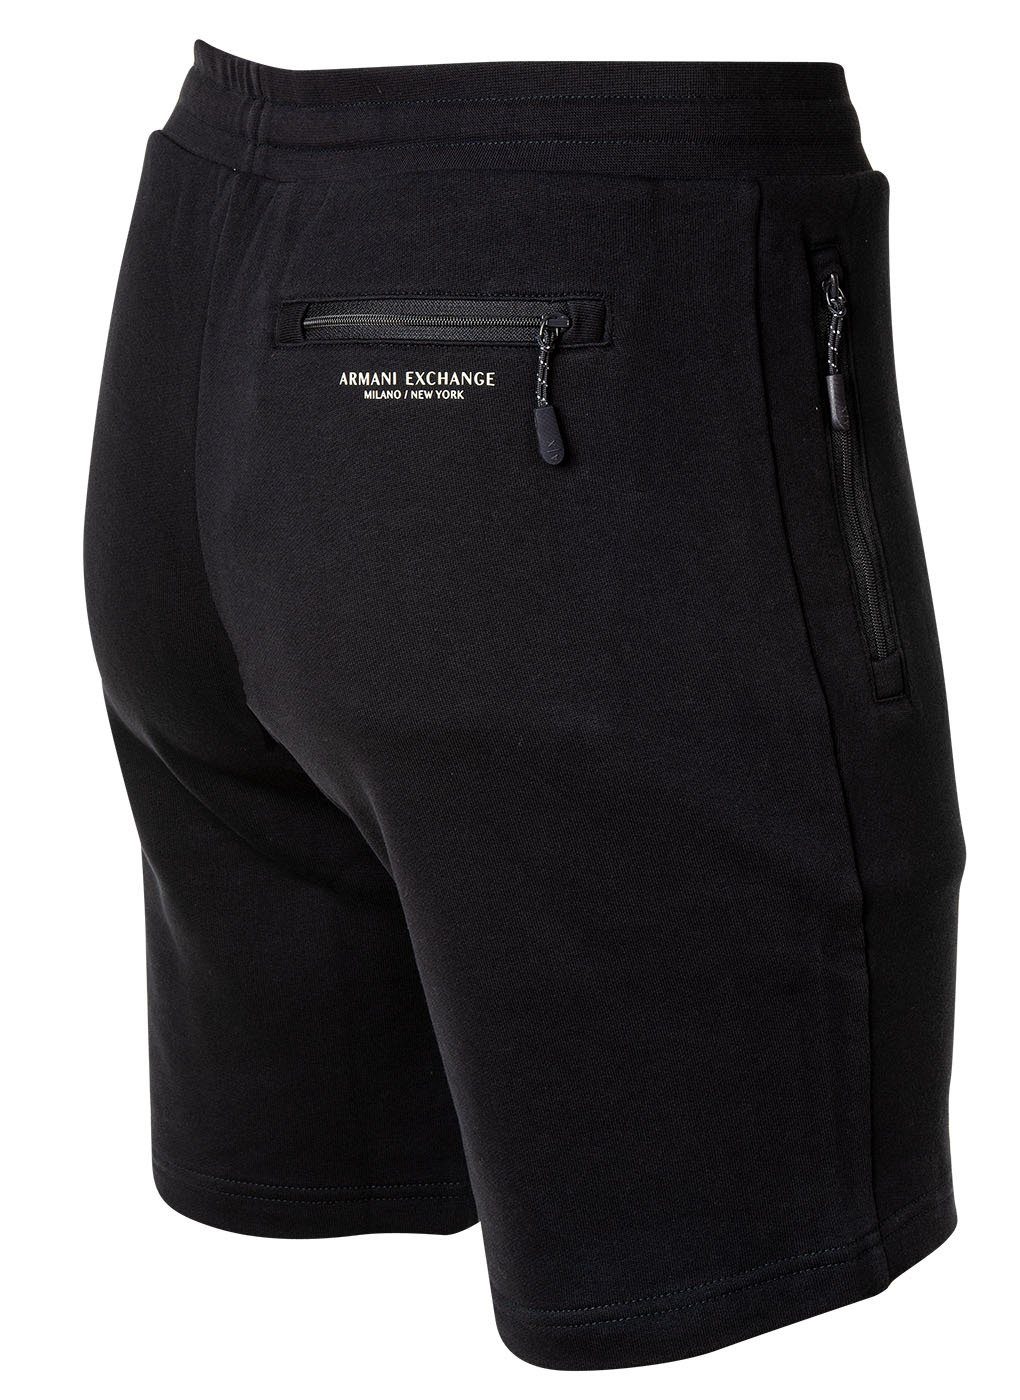 EXCHANGE kurz Pants, Jogginghose Sweatshorts Herren - ARMANI Loungewear Marine